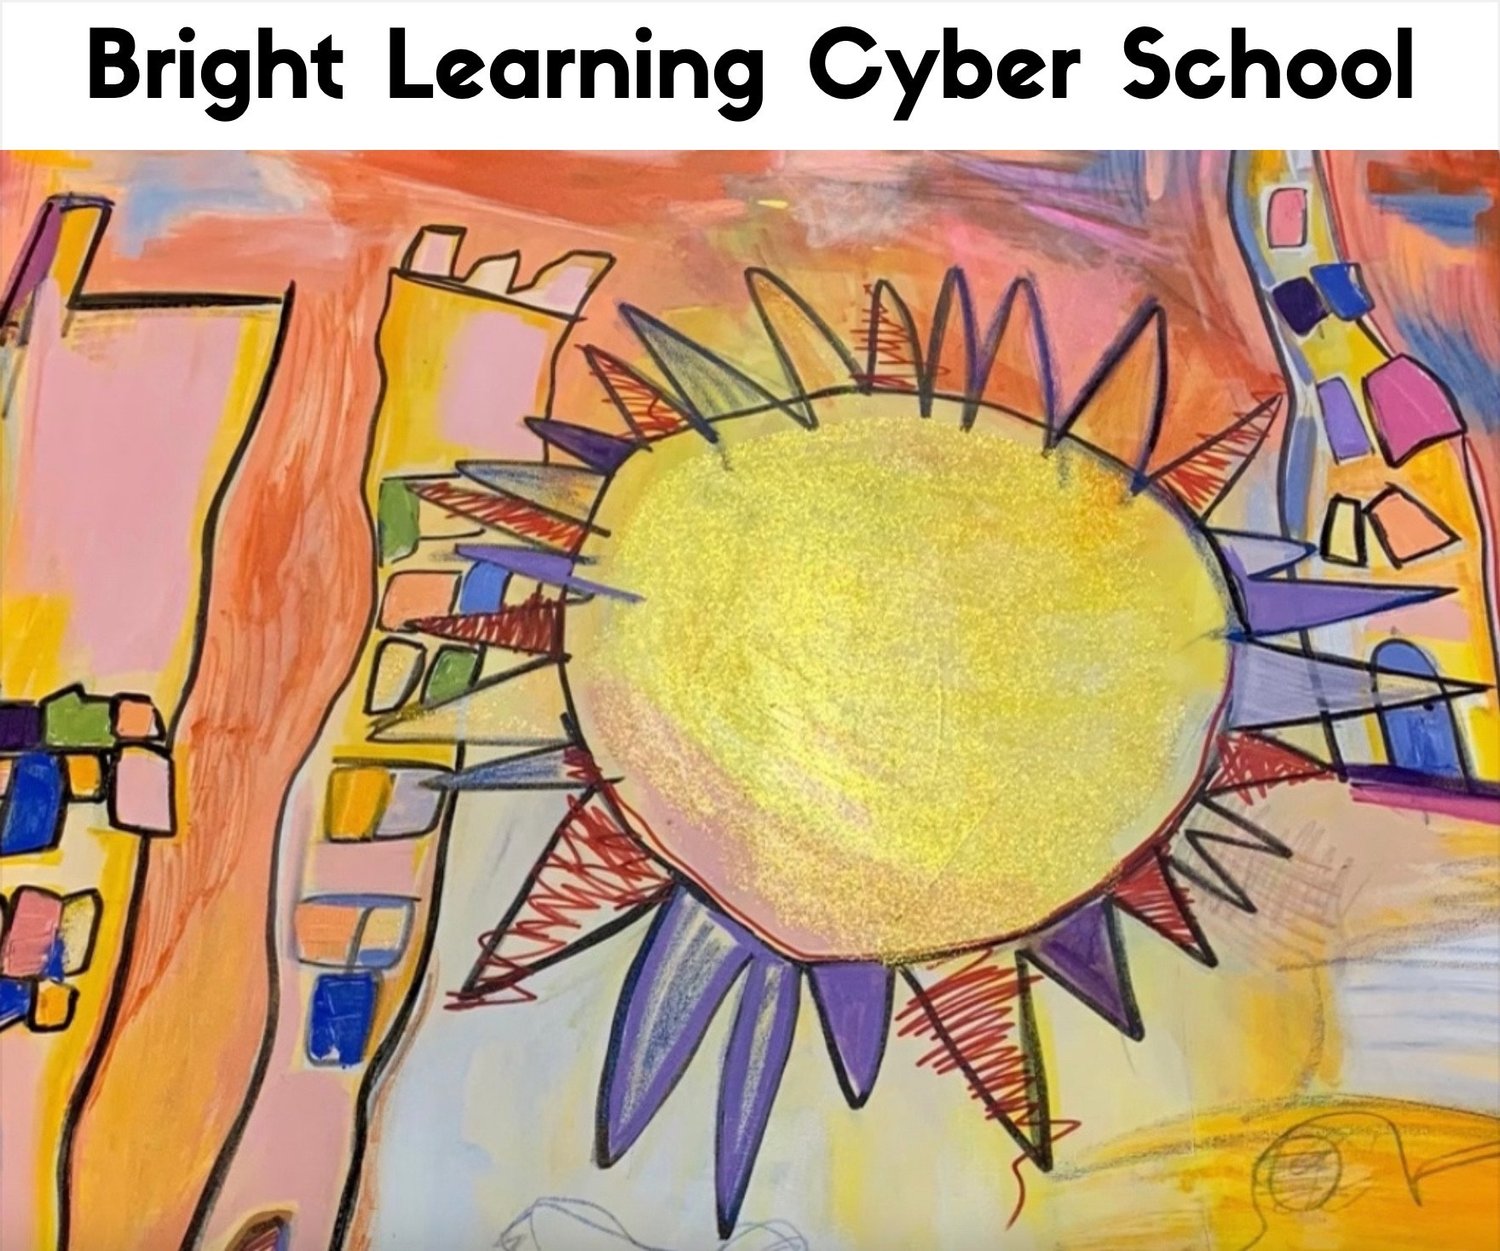 Bright Learning Cyber School